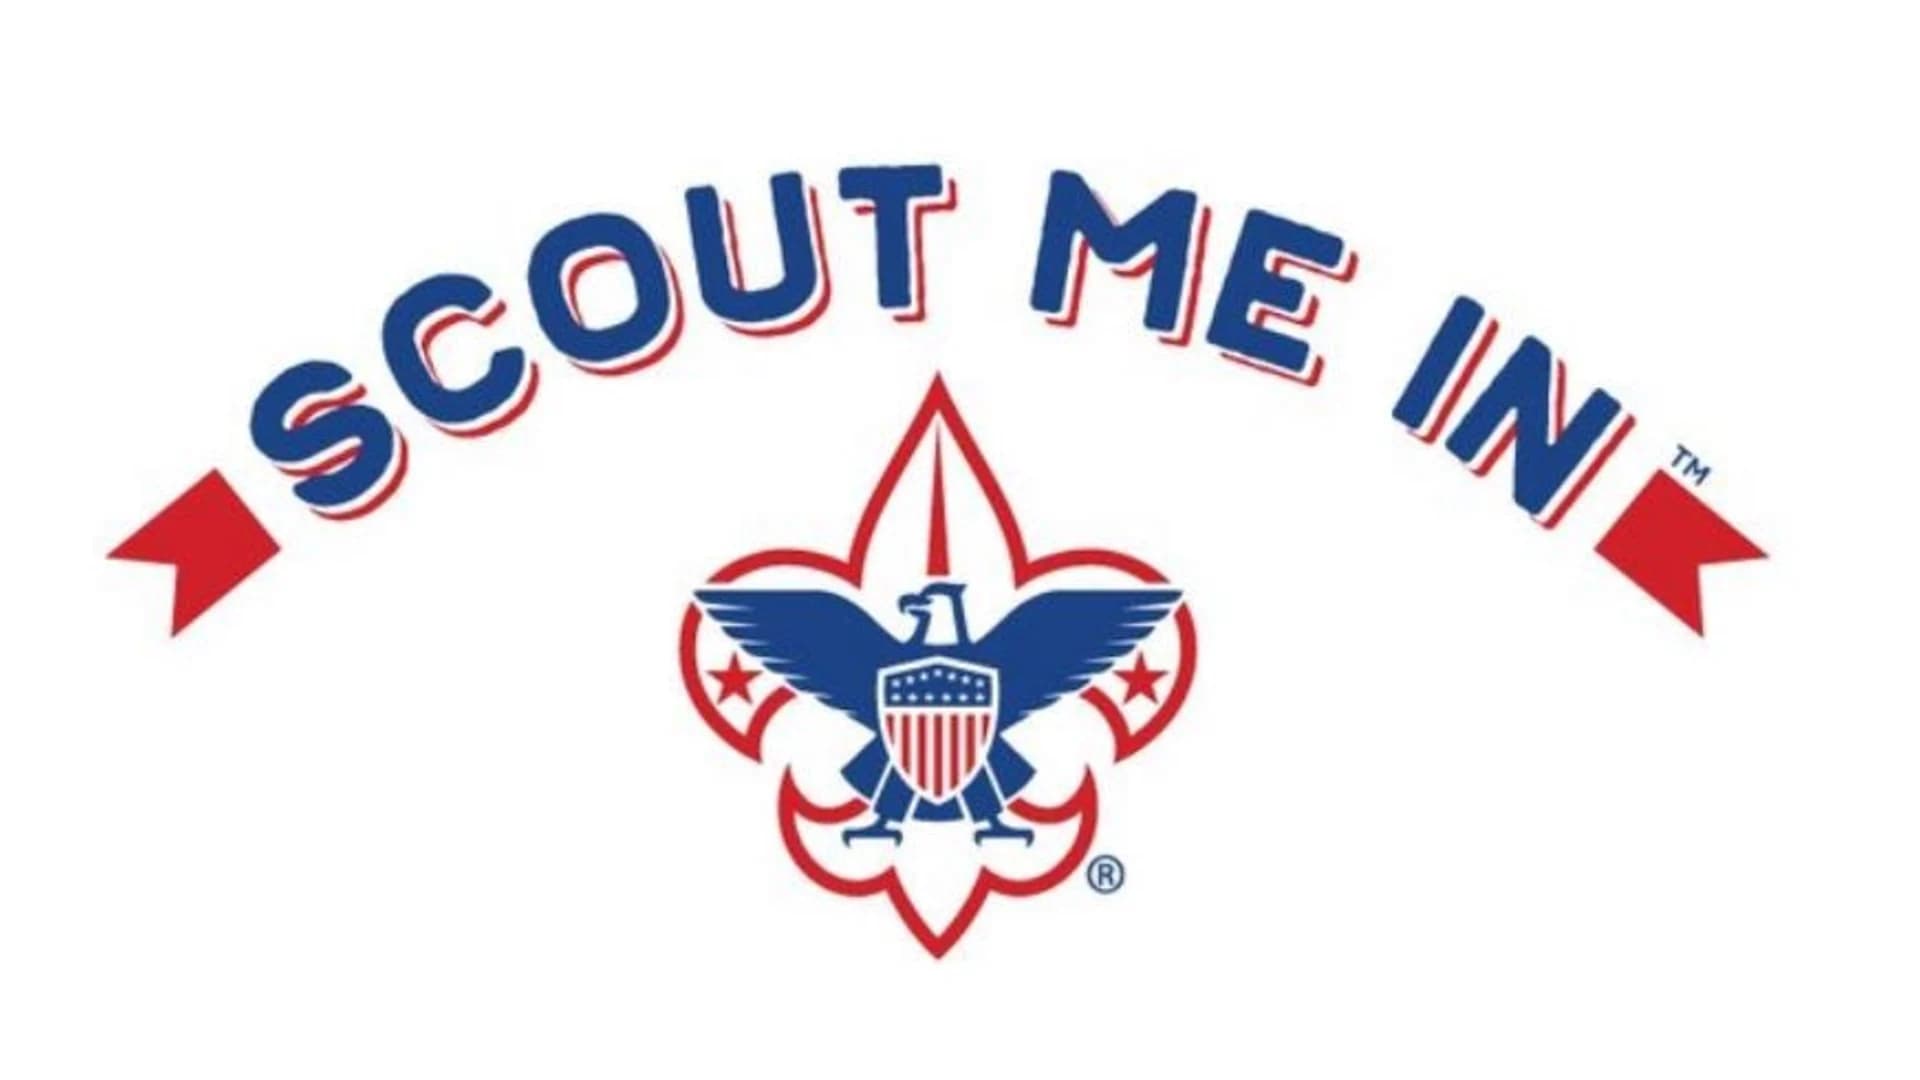 As girls arrive, Boy Scouts change name of flagship program